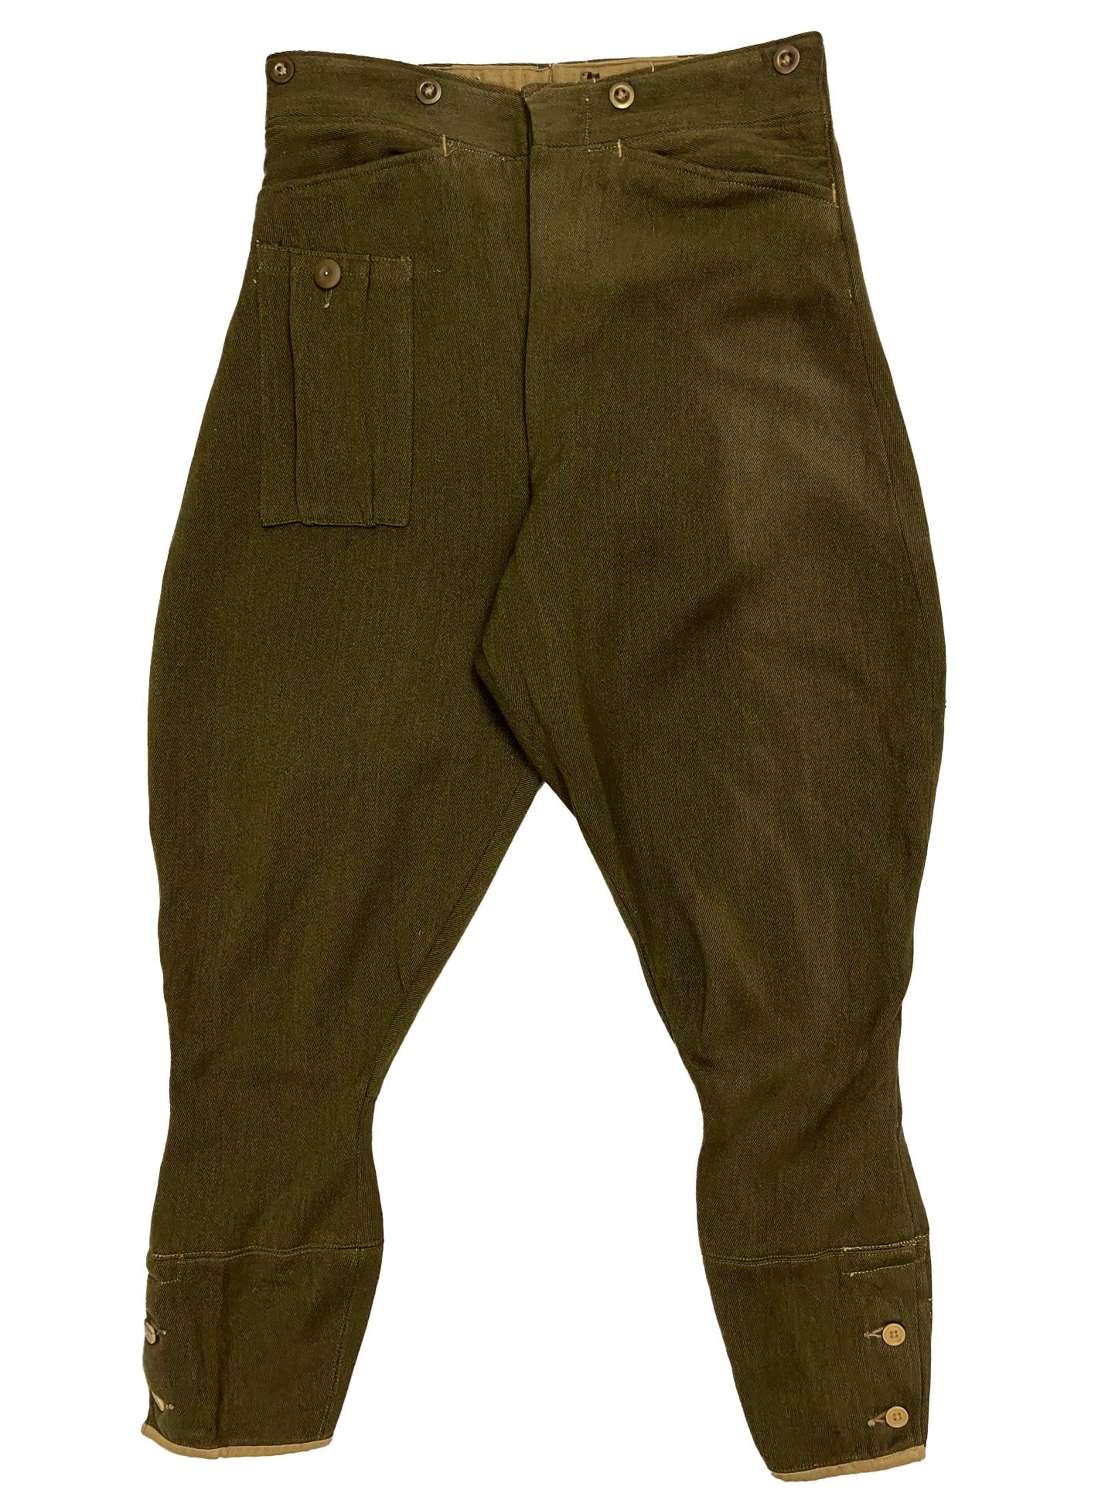 Original 1941 Dated British Army Dispatch Riders Breeches - Size 4